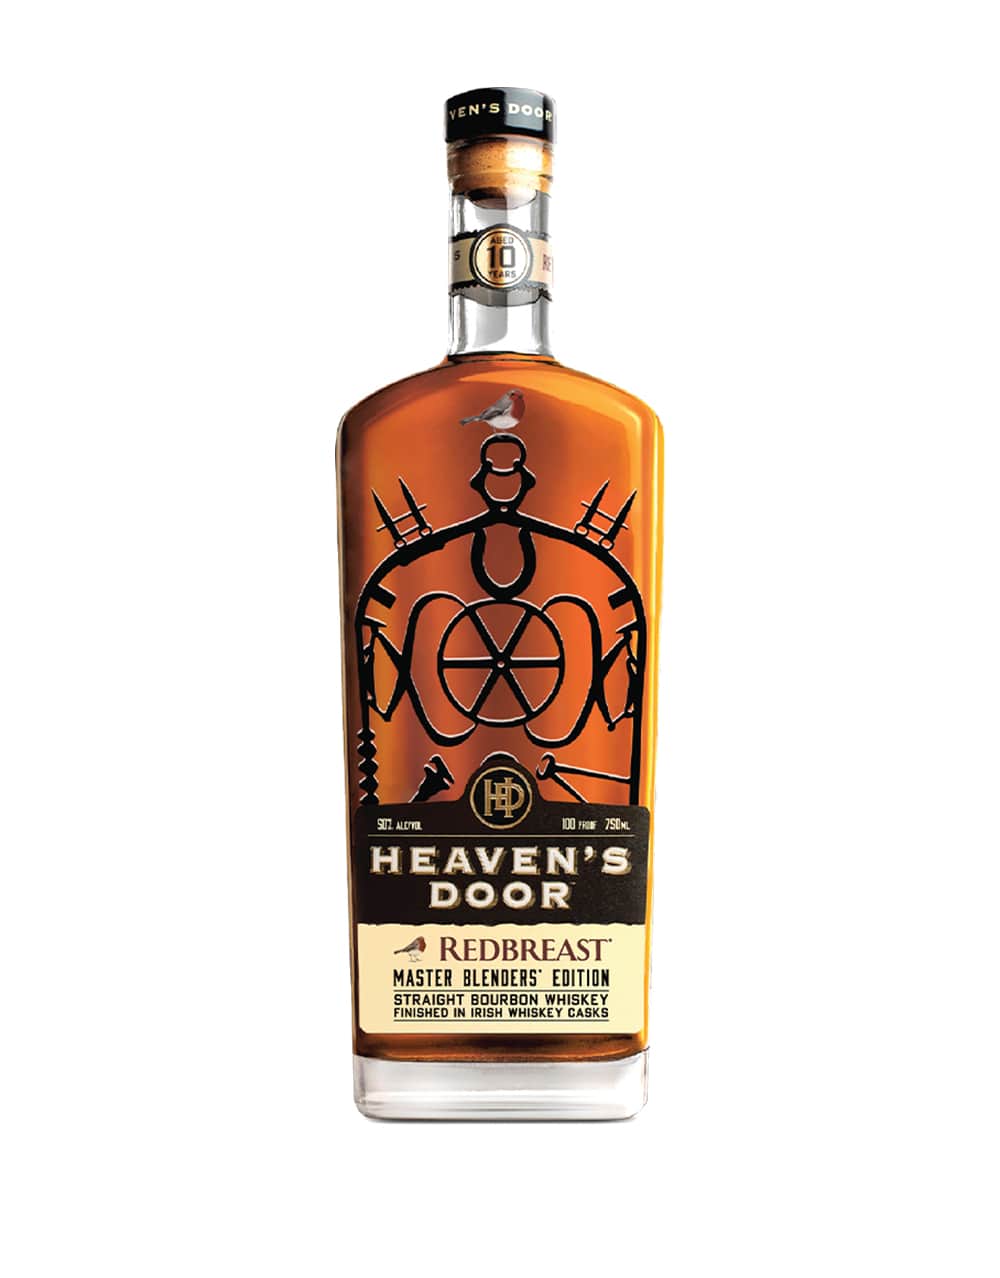 Heavens Door Redbreast Master Blenders Edition Straight Bourbon Whiskey